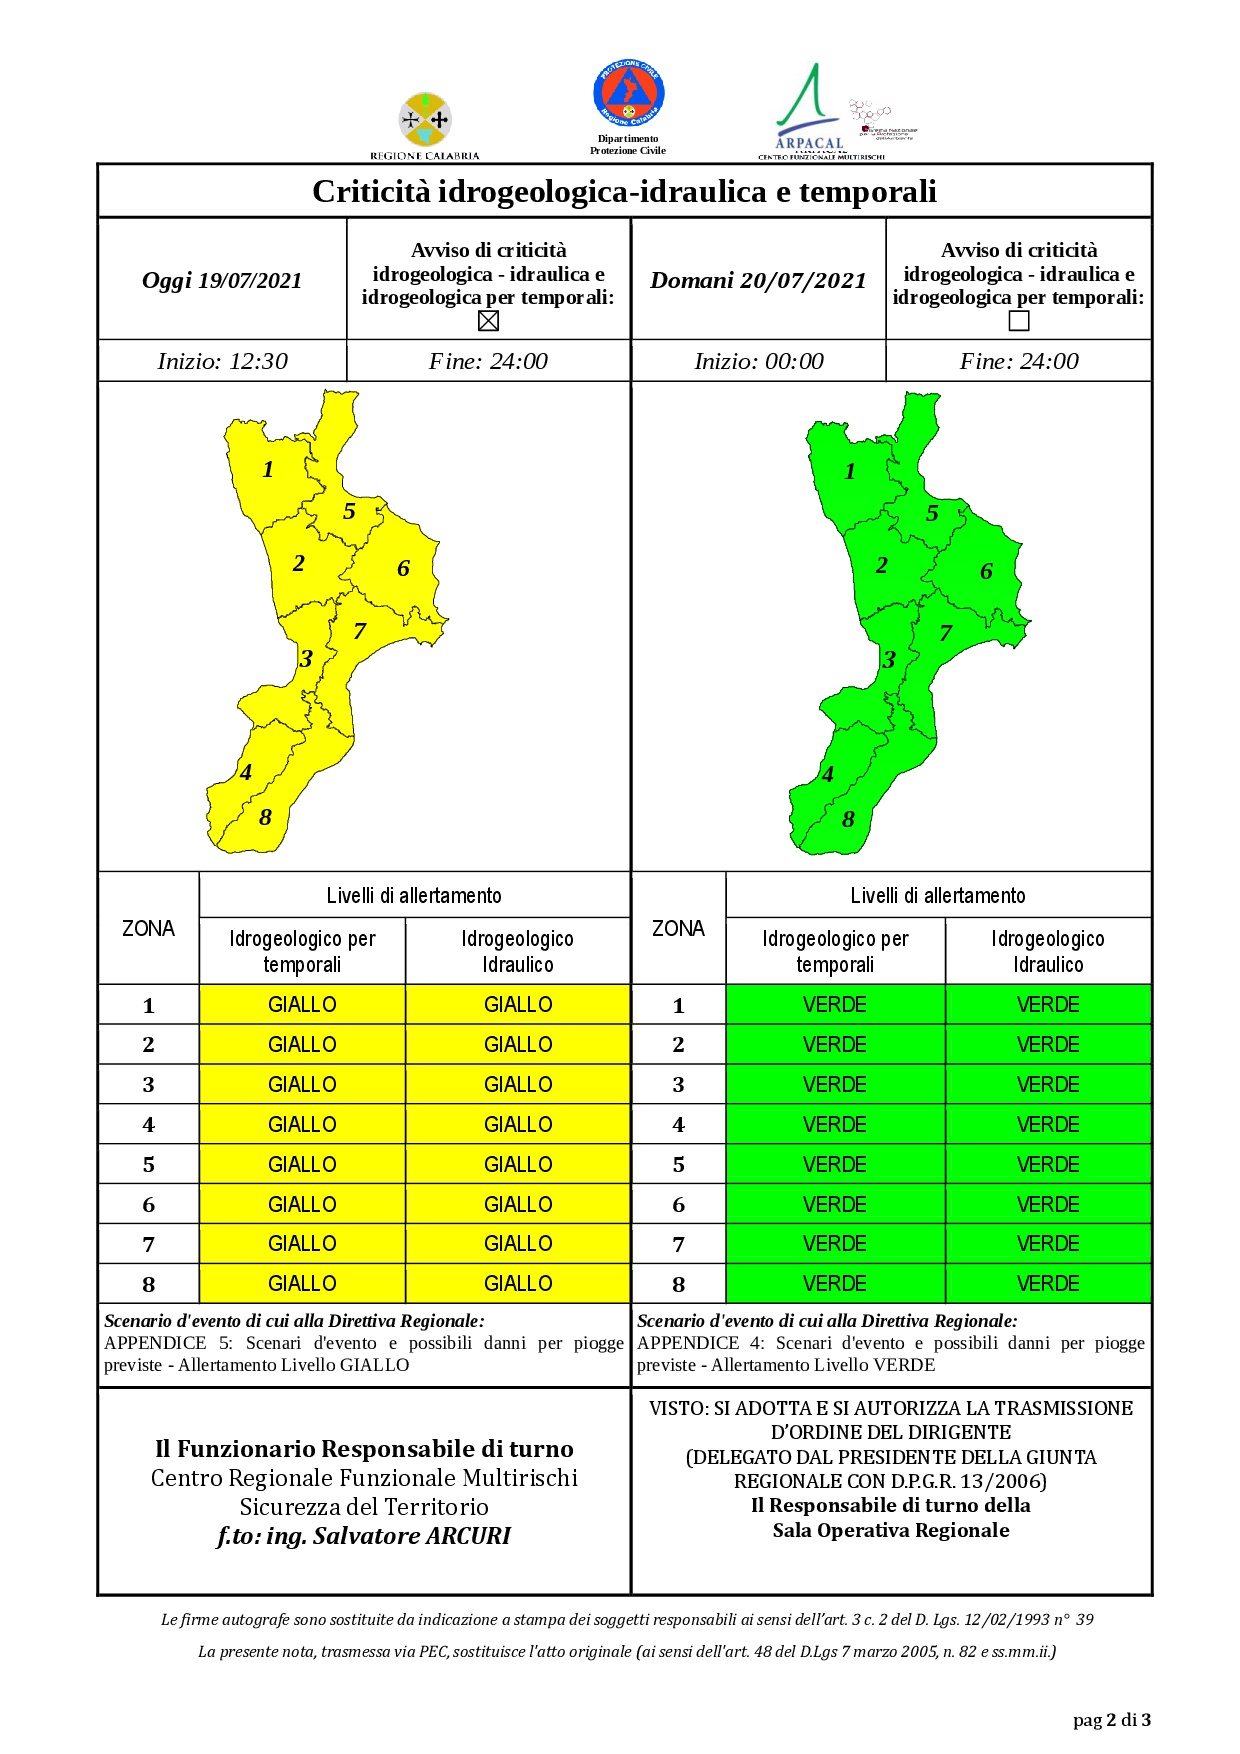 Criticità idrogeologica-idraulica e temporali in Calabria 19-07-2021